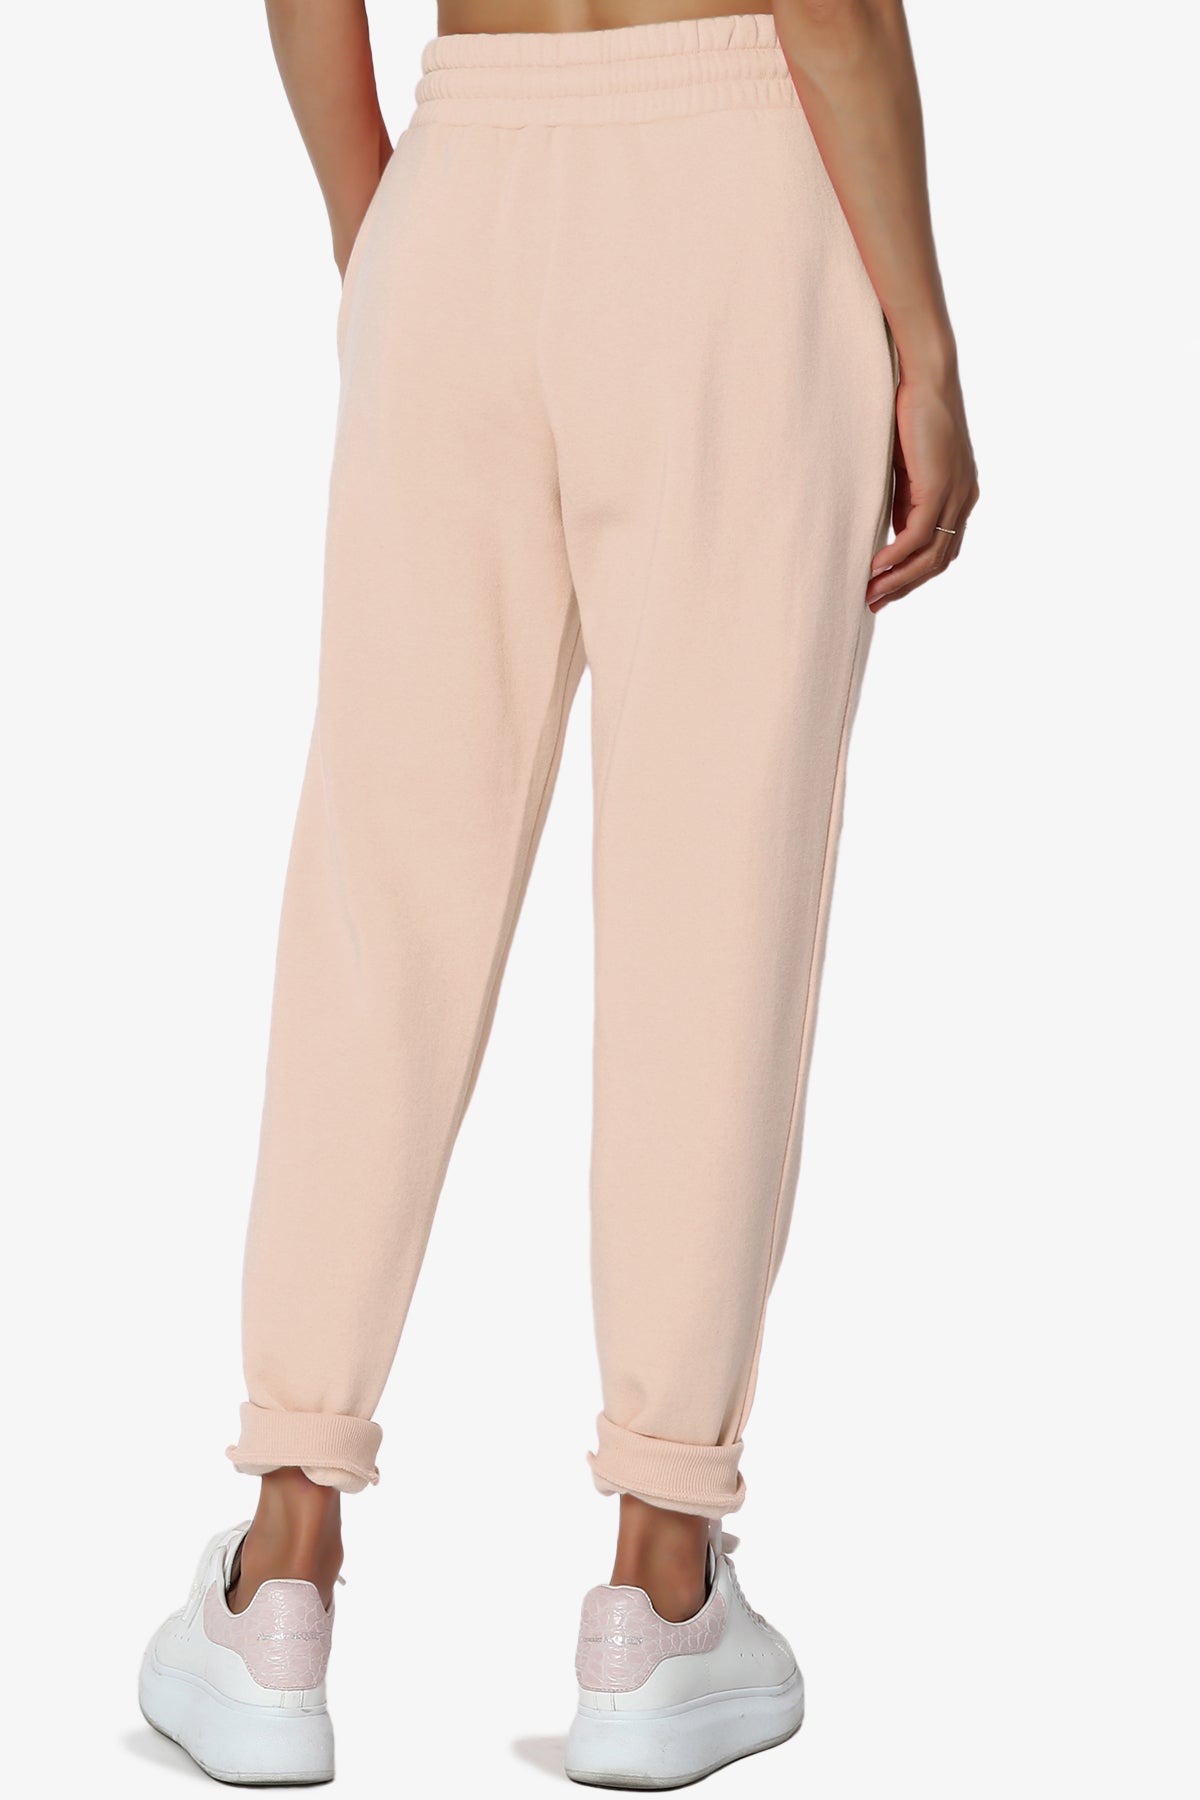 Sweat Pants Plus Size Casual Solid Color Comfy Low Rise Pants for